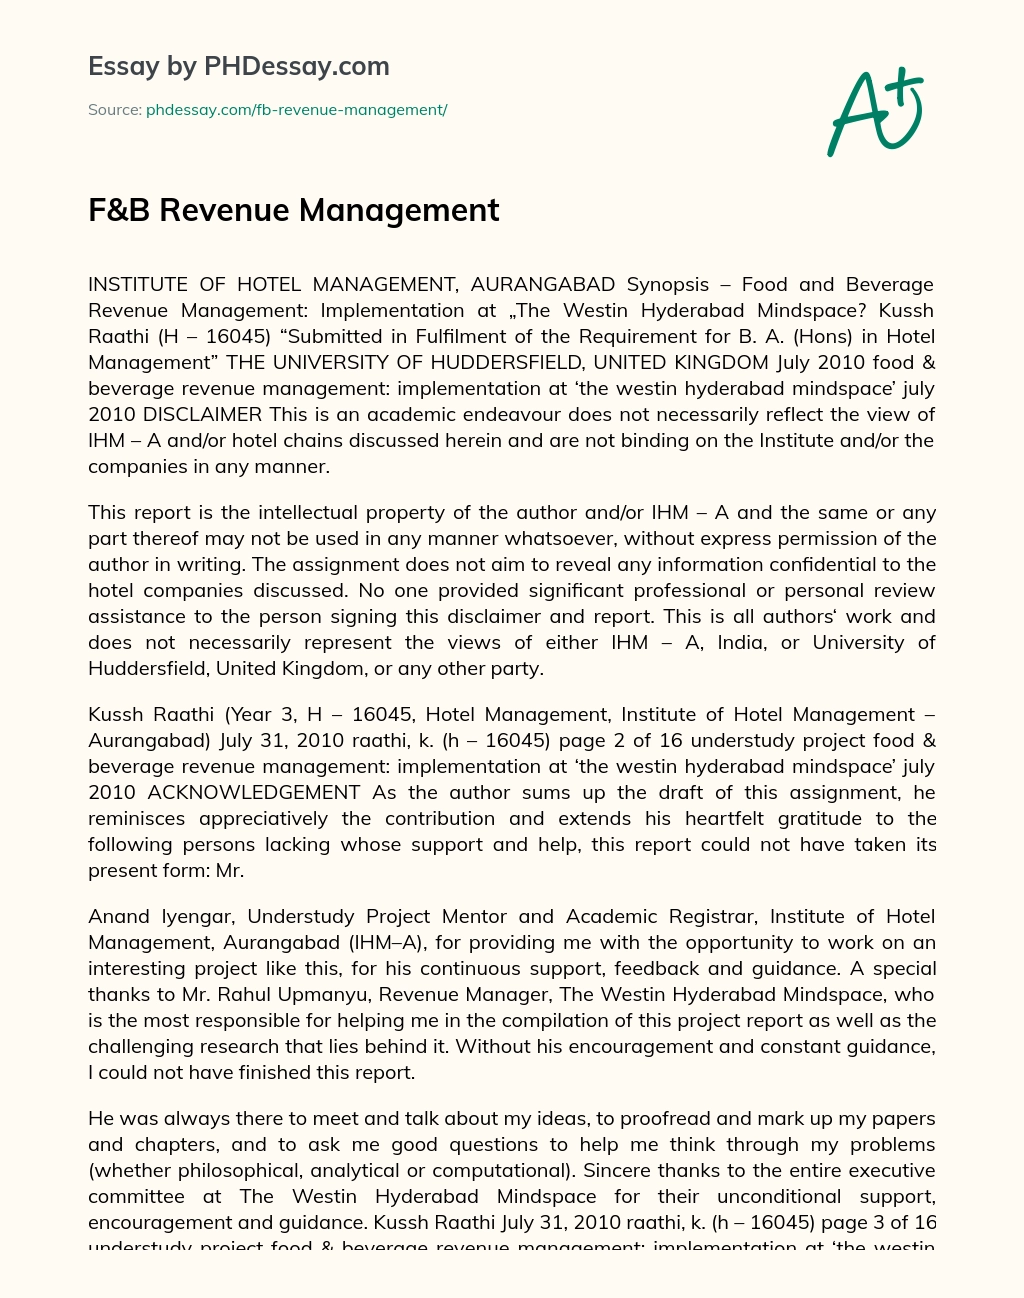 F&B Revenue Management essay